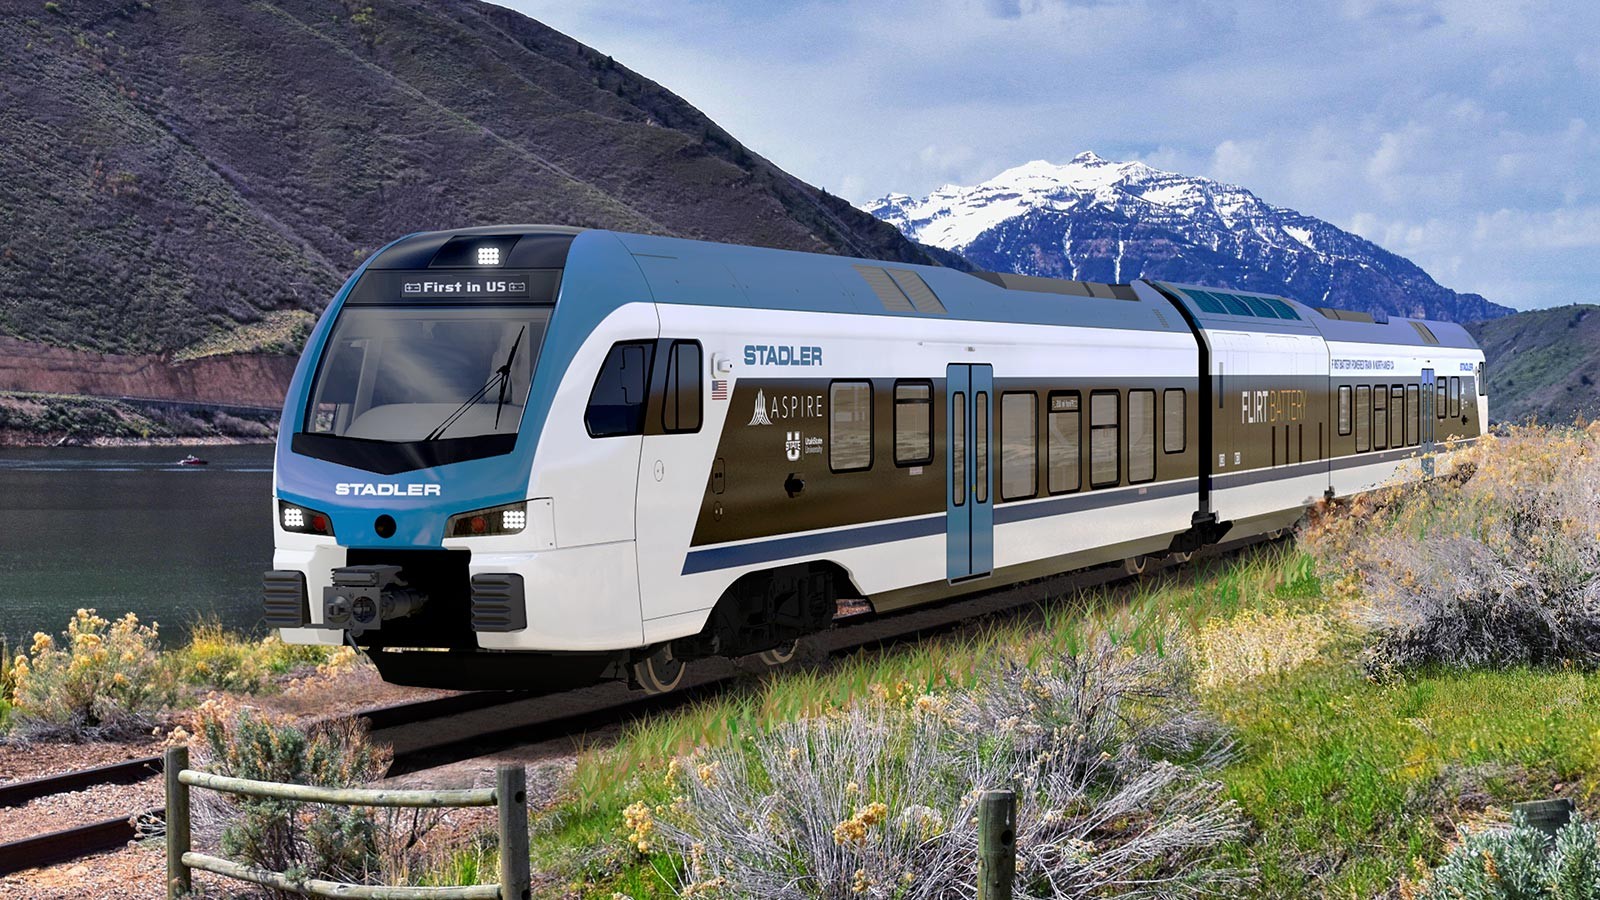 Partnership Between USU and Stadler Brings Battery-Powered Trains